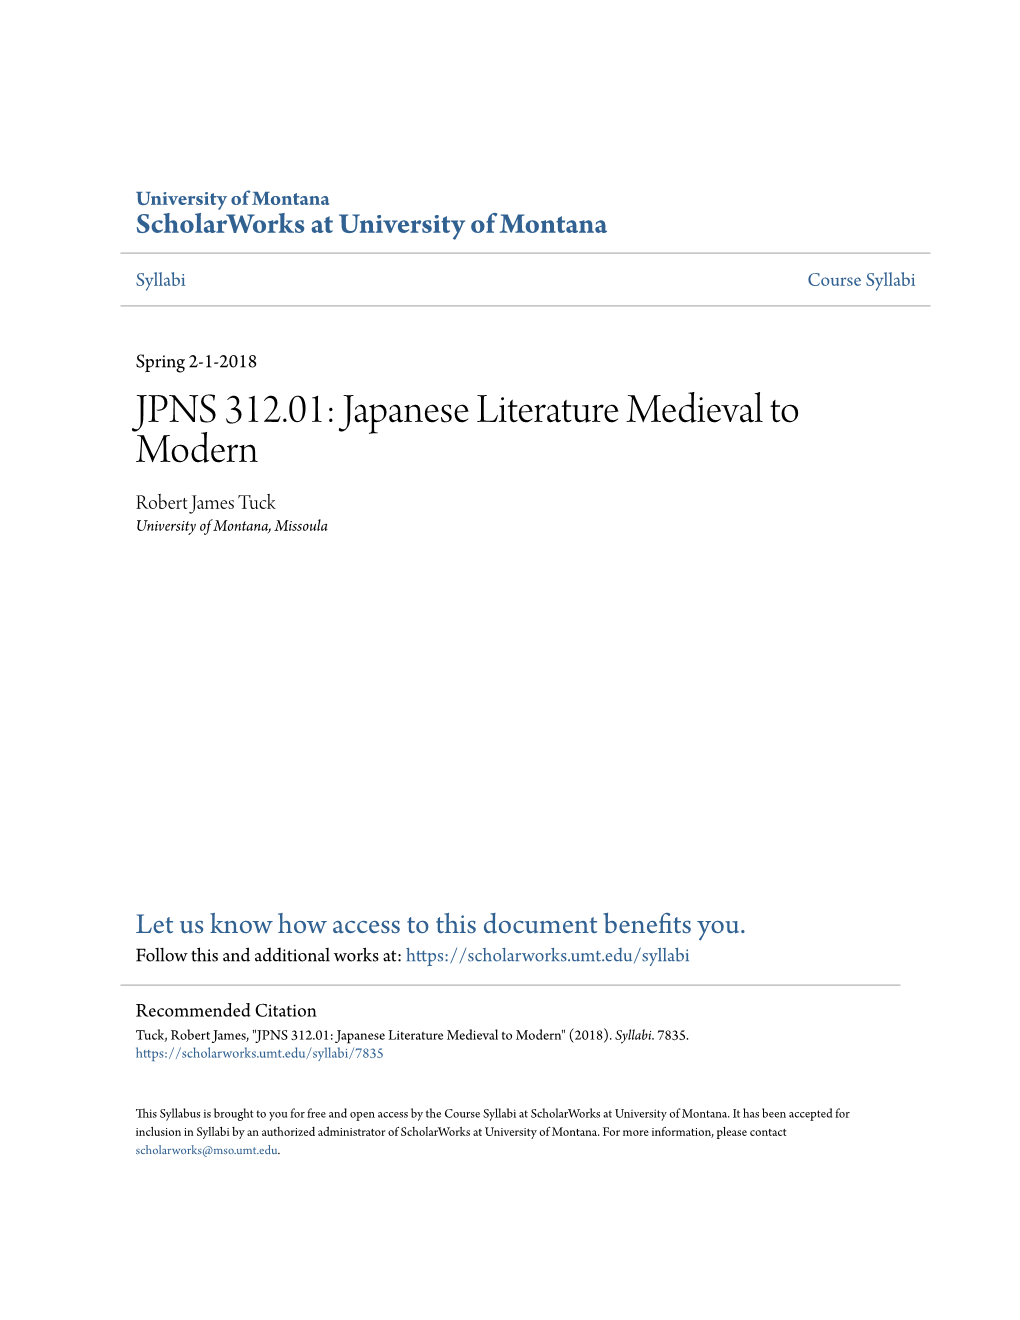 JPNS 312.01: Japanese Literature Medieval to Modern Robert James Tuck University of Montana, Missoula